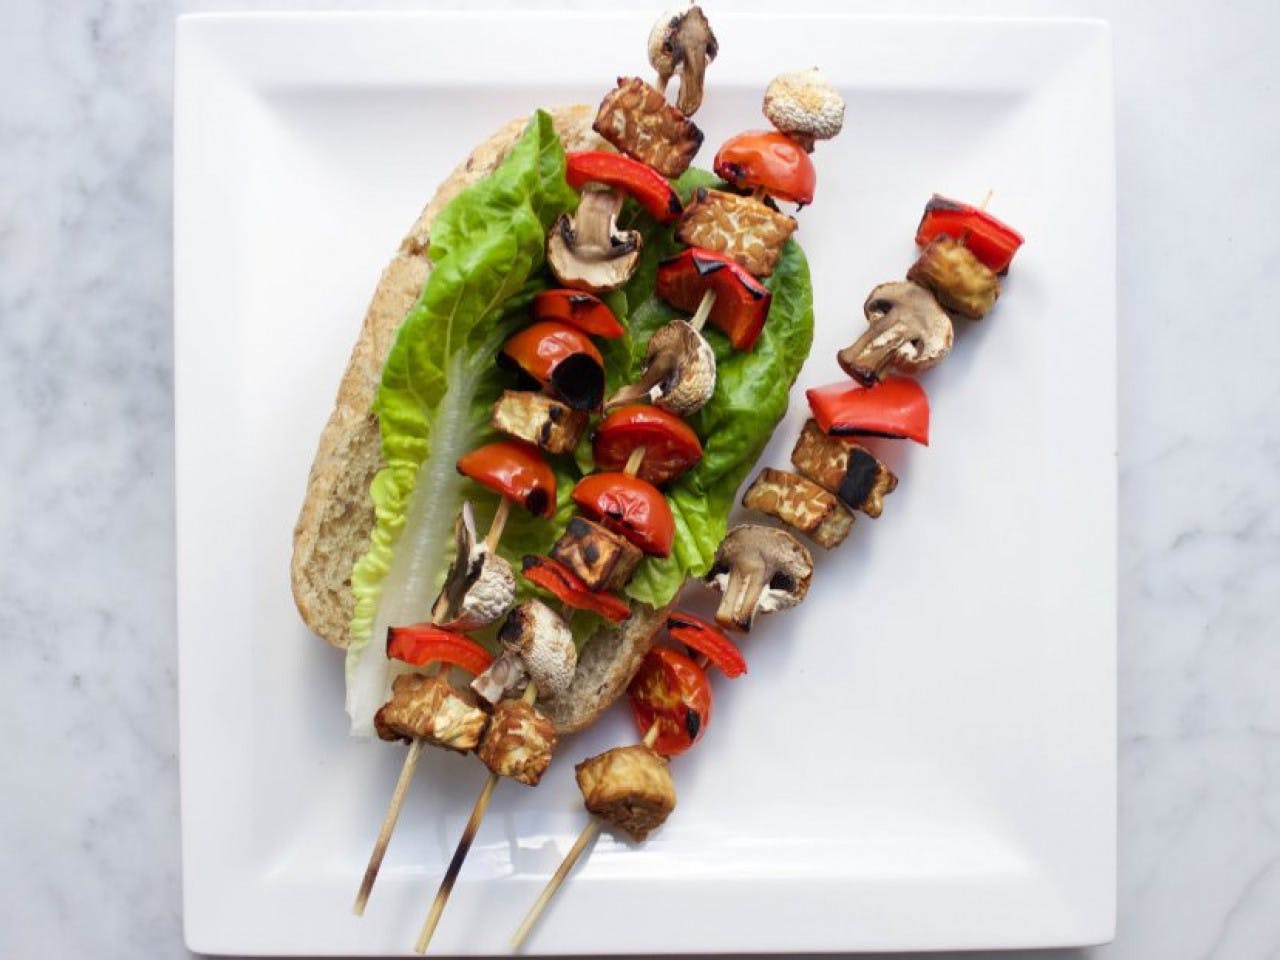 Vegan BBQ tempeh and mushroom skewers with romaine lettuce